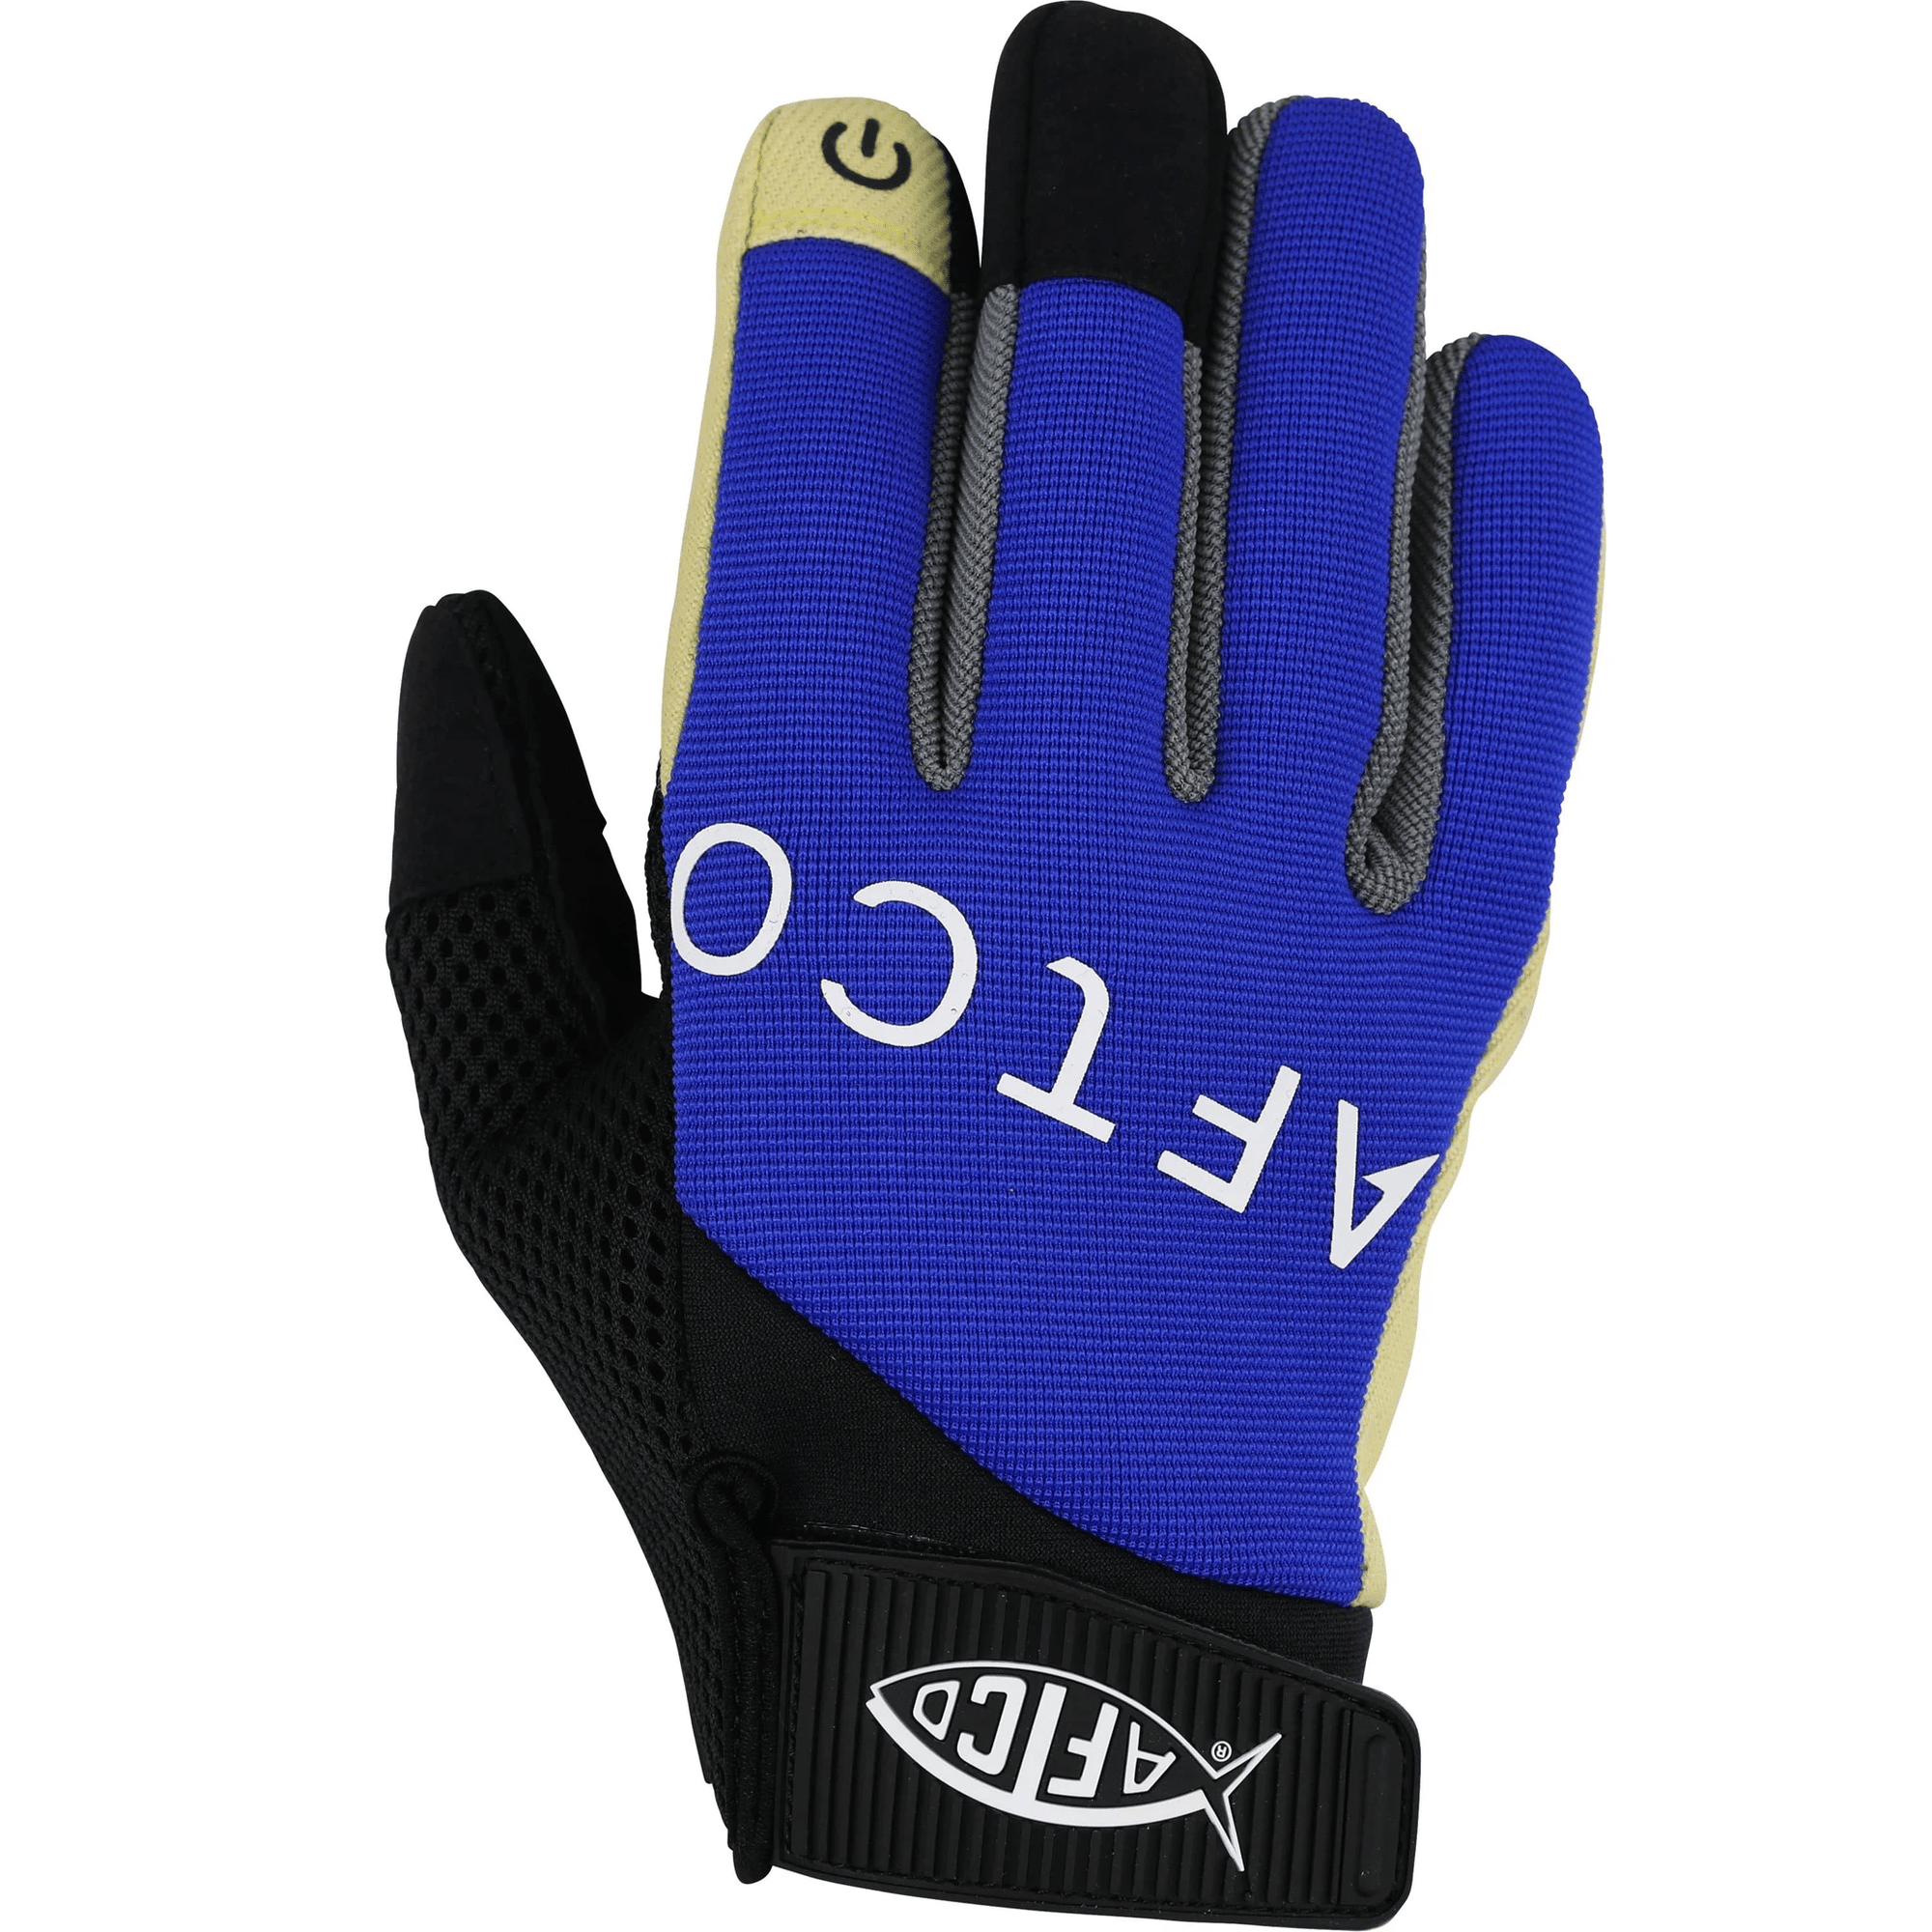 Aftco Release Glove Blue / Medium